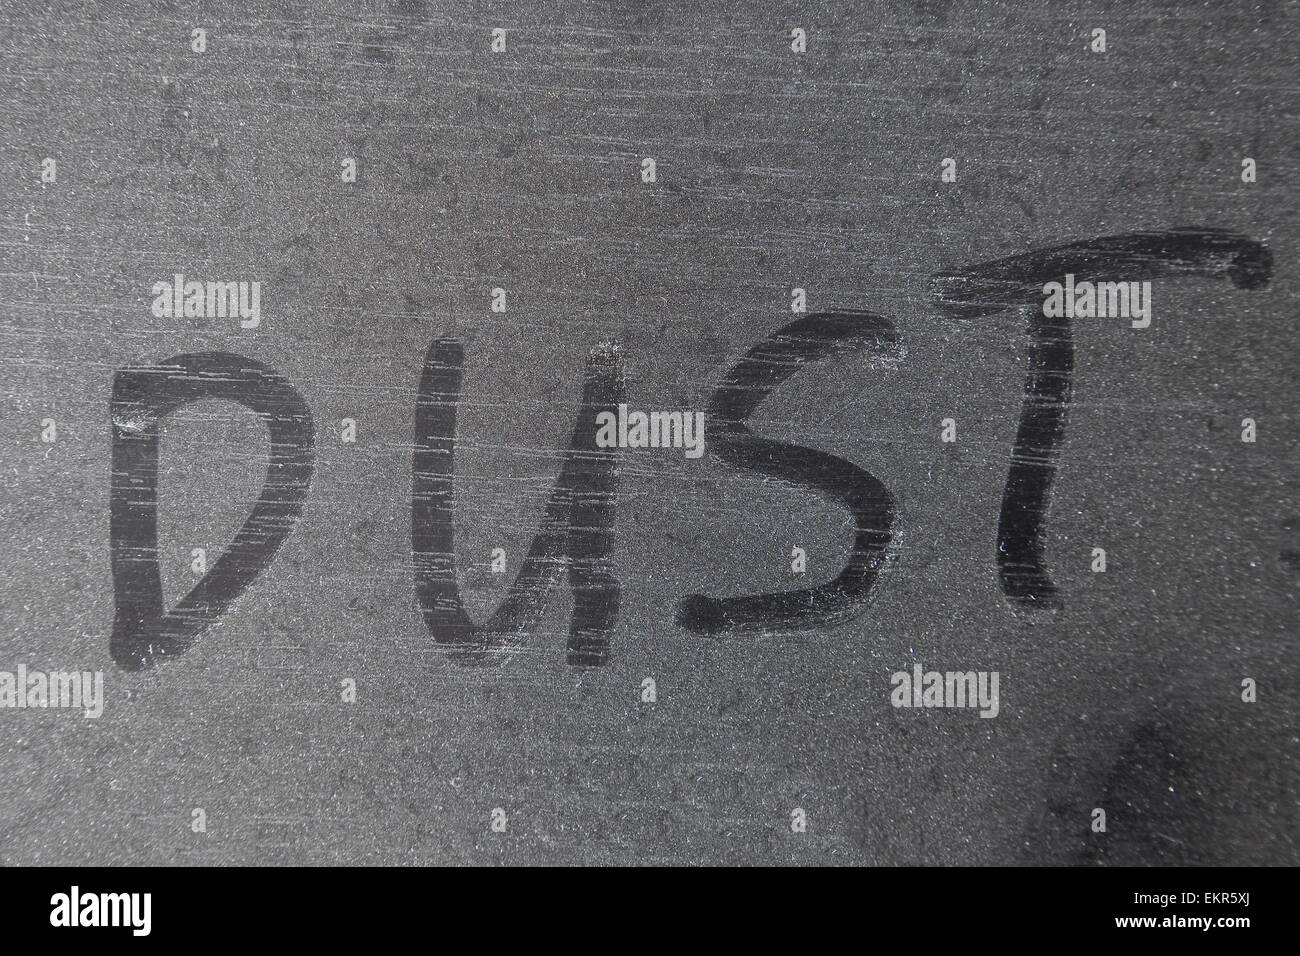 Dusty surface Stock Photo